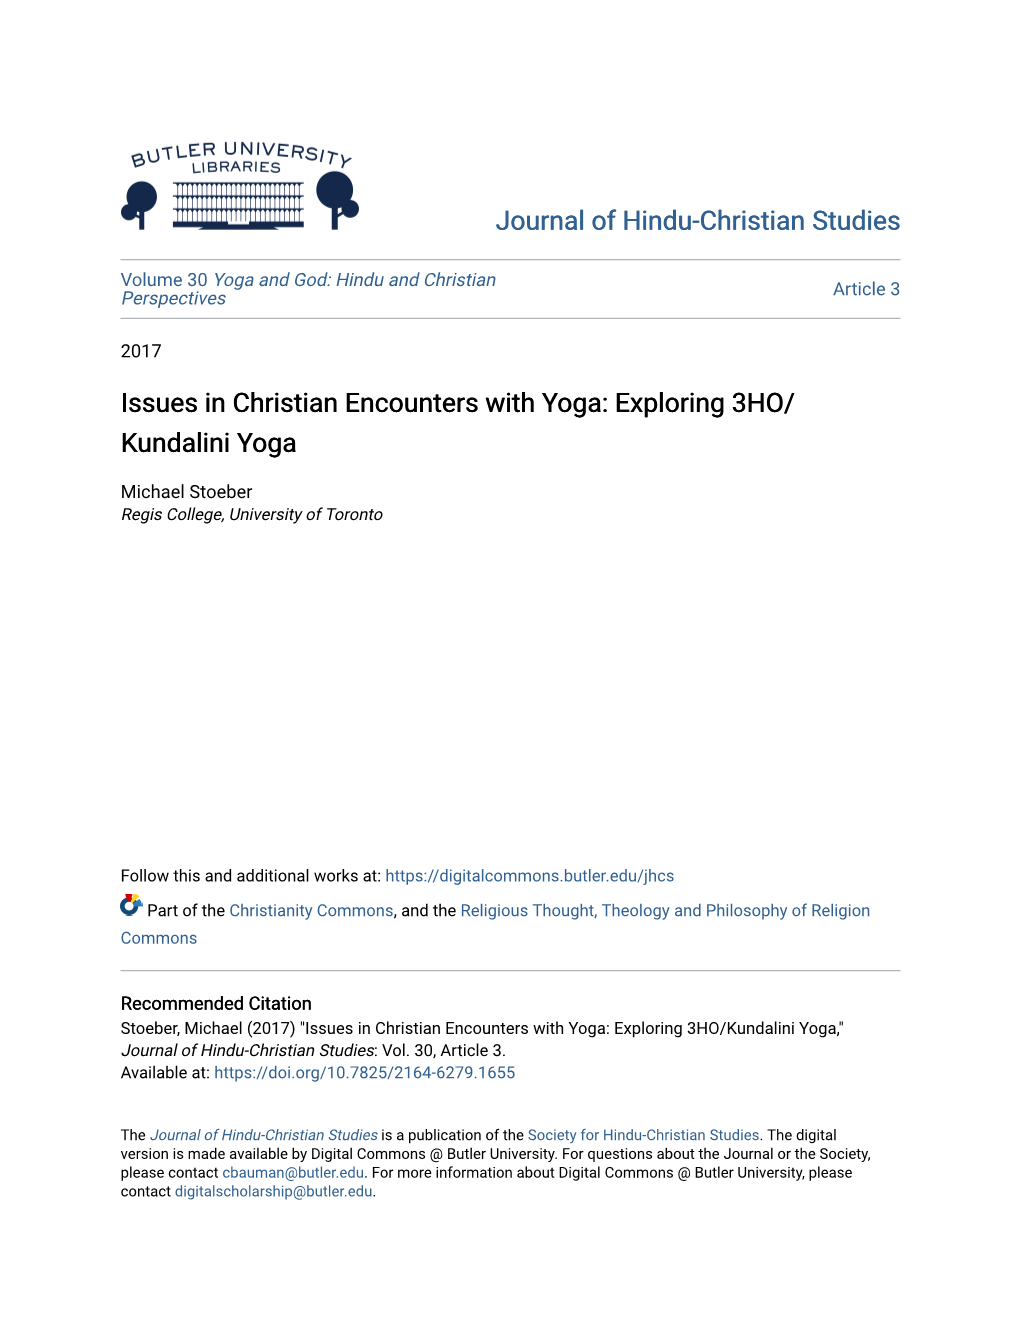 Exploring 3HO/Kundalini Yoga," Journal of Hindu-Christian Studies: Vol